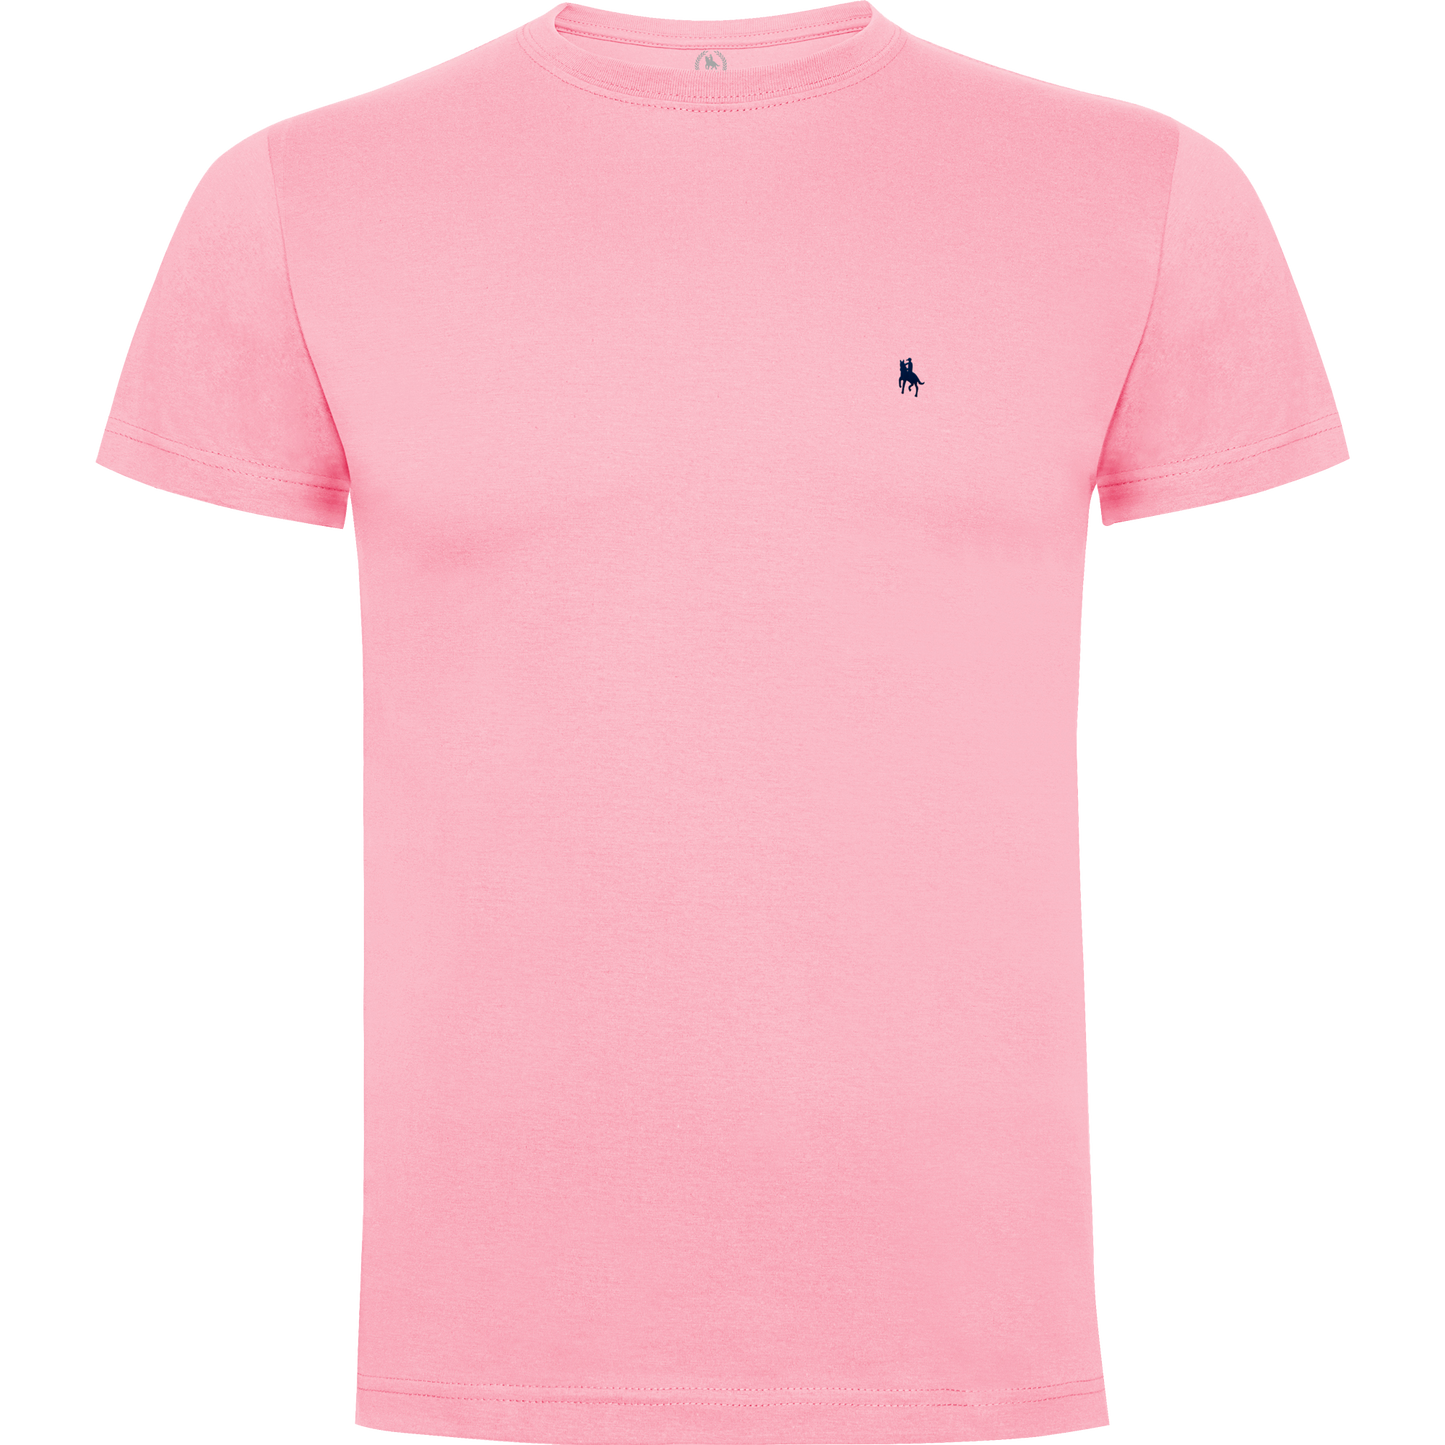 Camiseta Rosa manga corta